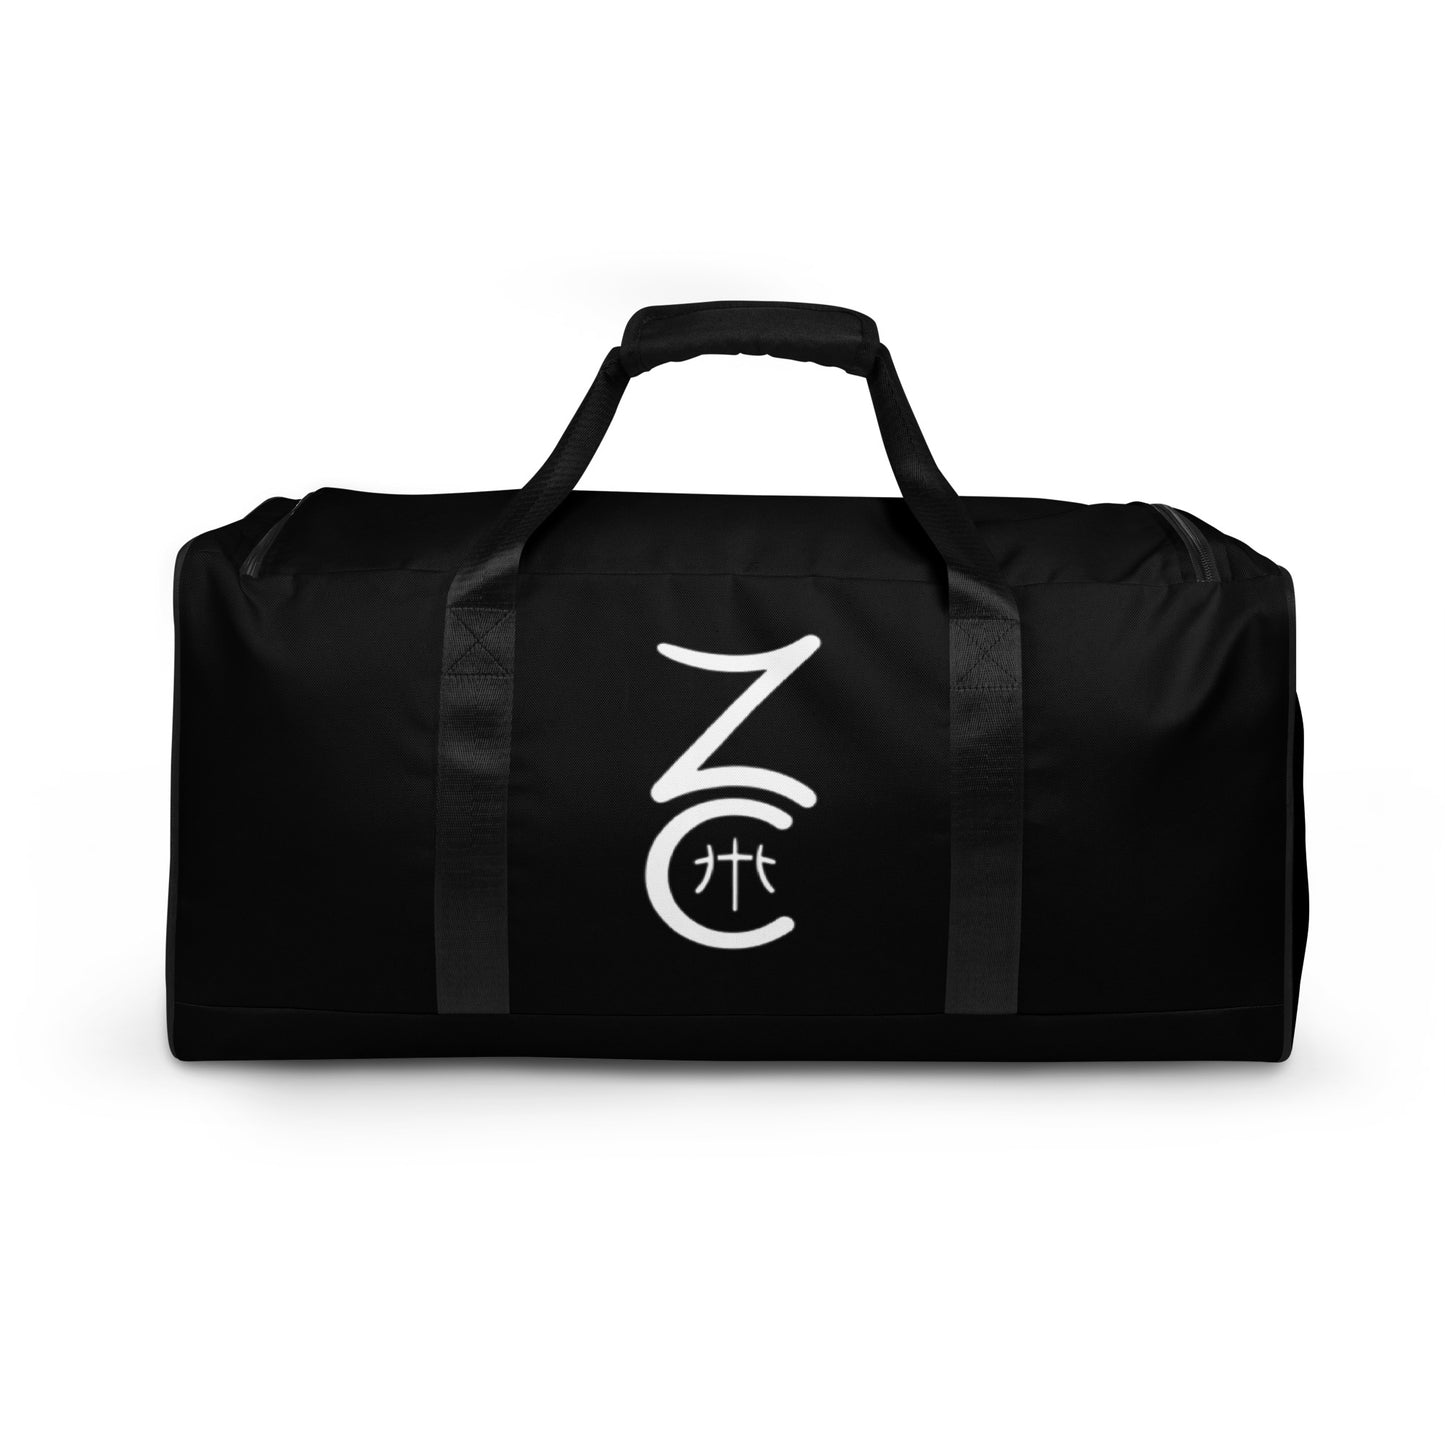 ZC Duffle bag